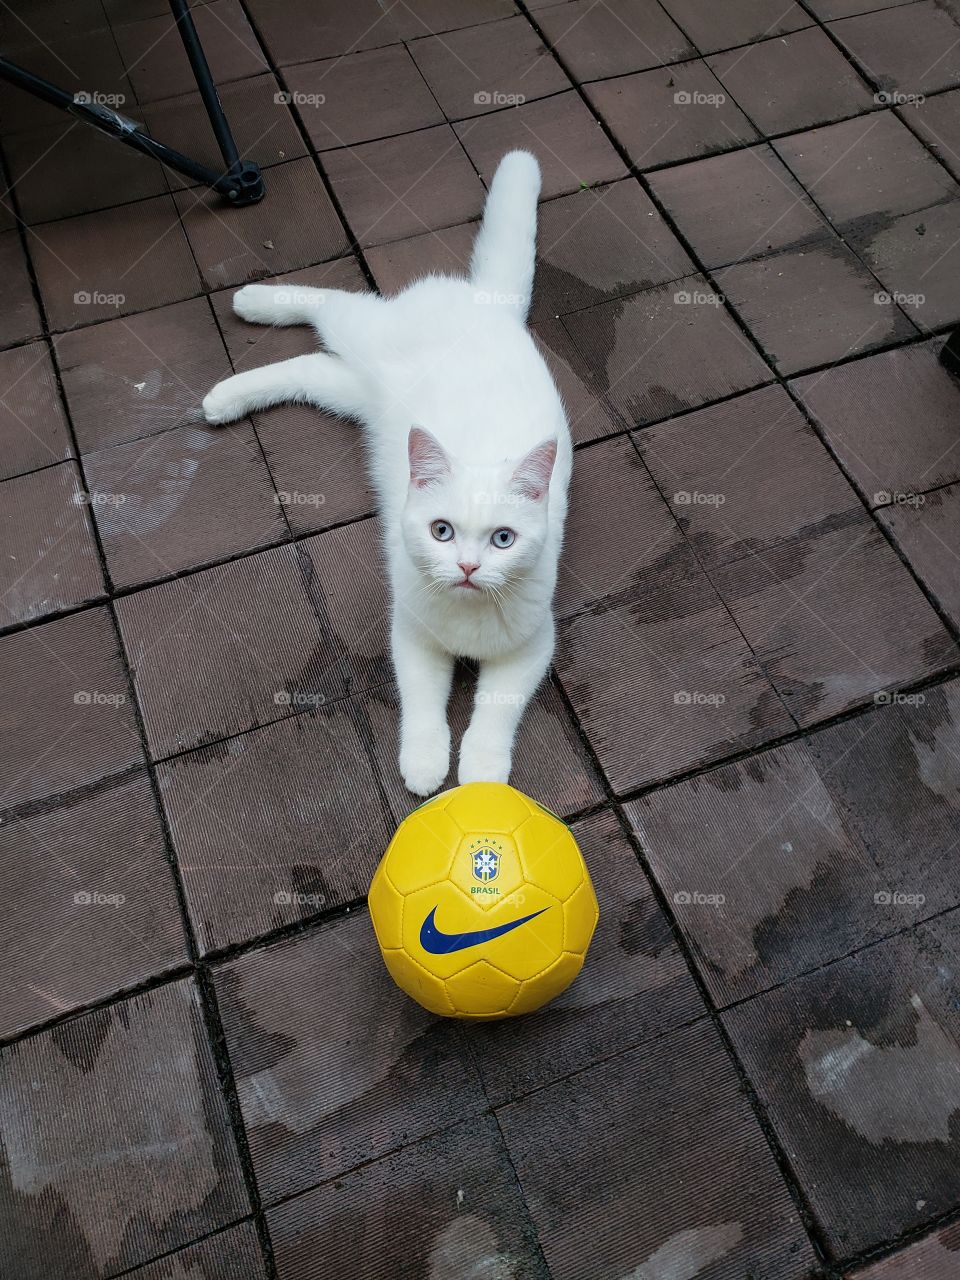 Brazilian kitty player